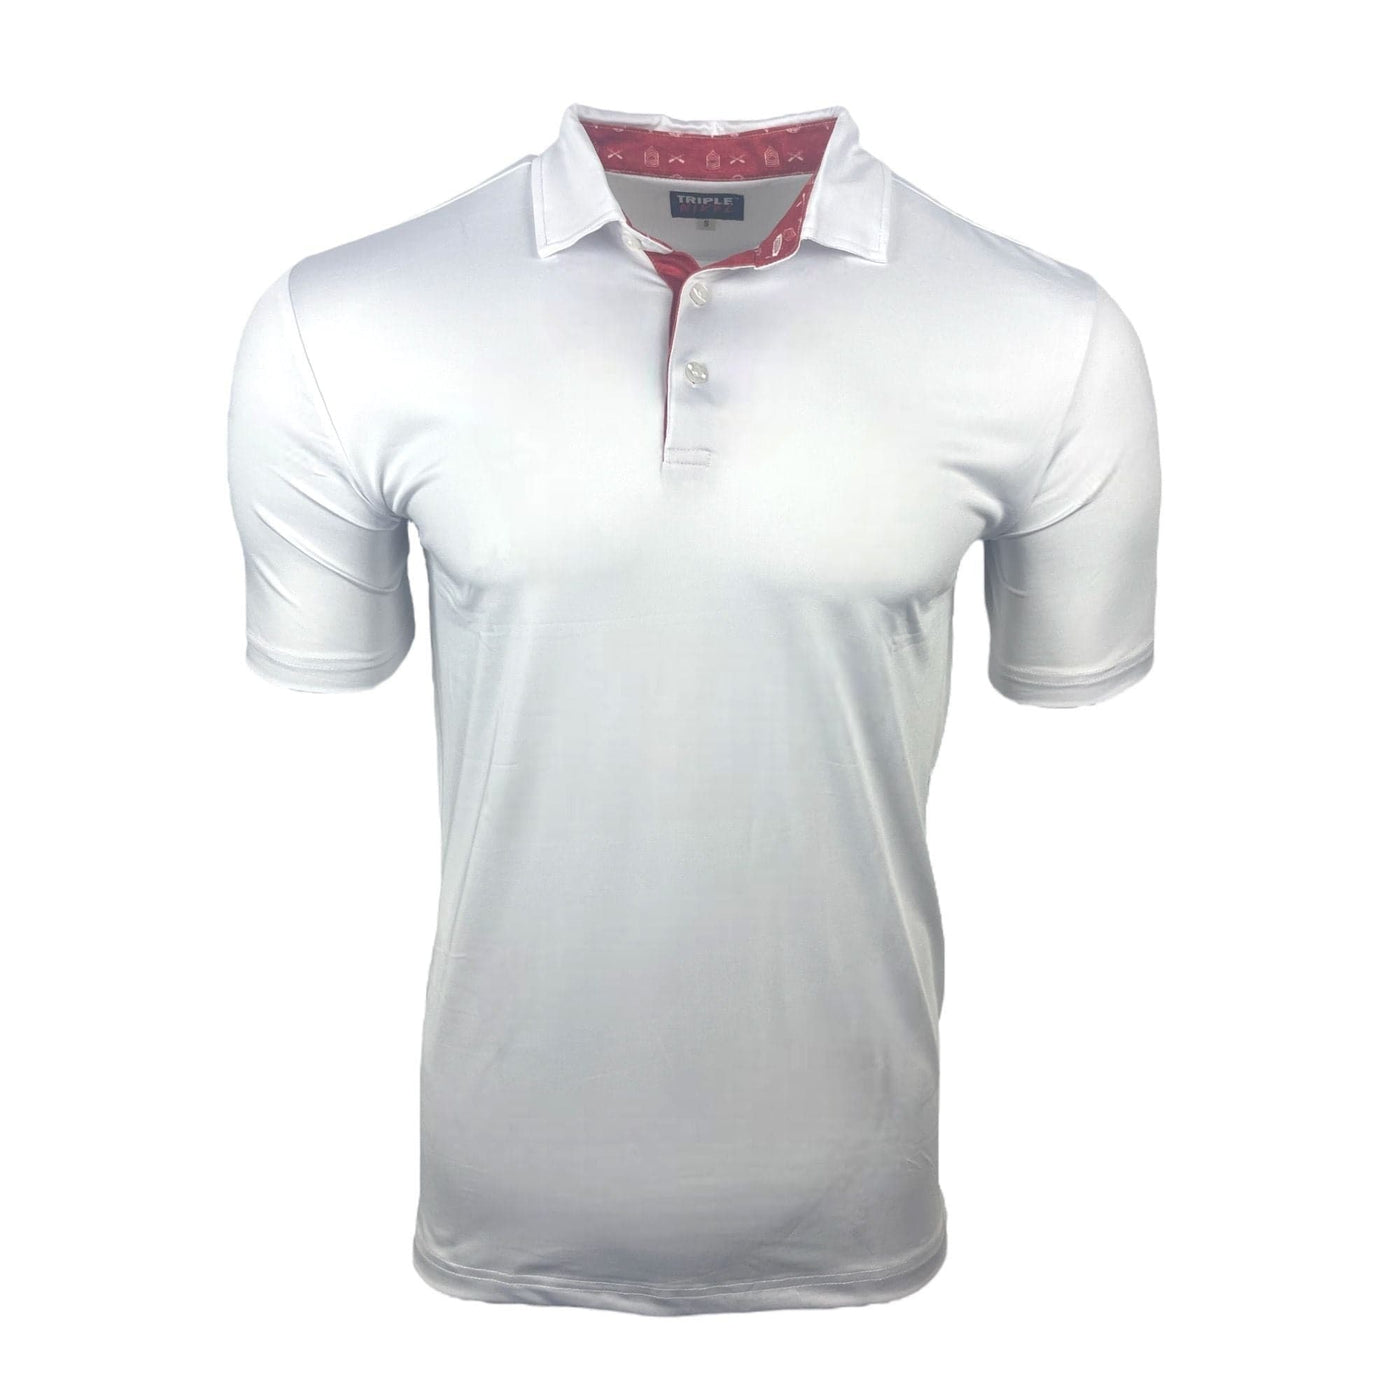 Triple Nikel Performance Polo S / Golf Wear Triple Nikel Golf Wear White Performance Polo